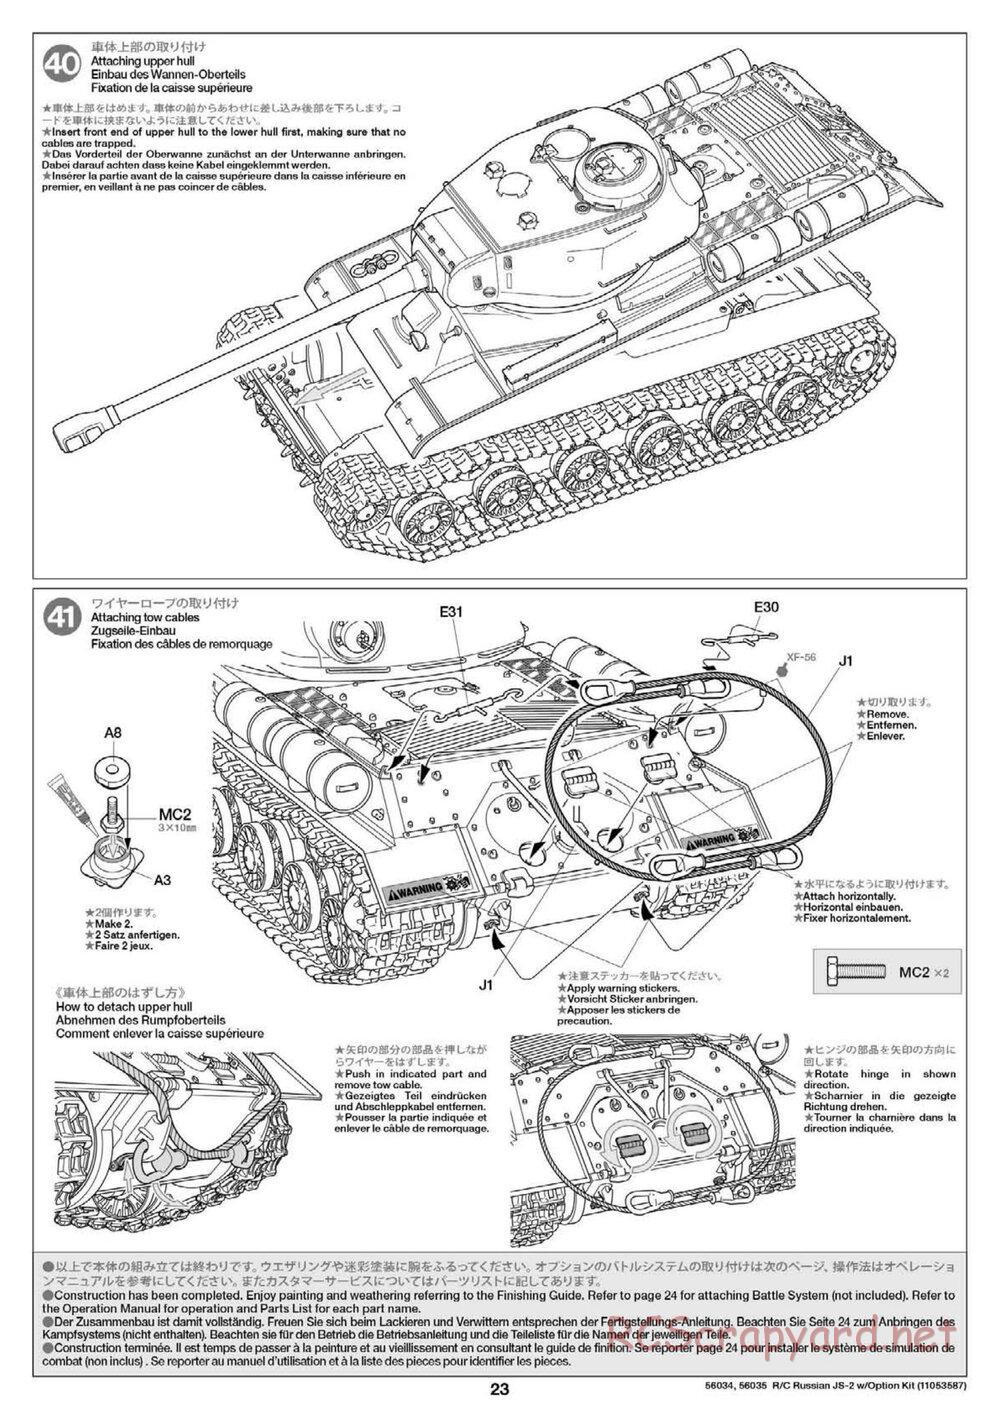 Tamiya - Russian Heavy Tank JS-2 1944 ChKZ - 1/16 Scale Chassis - Manual - Page 23